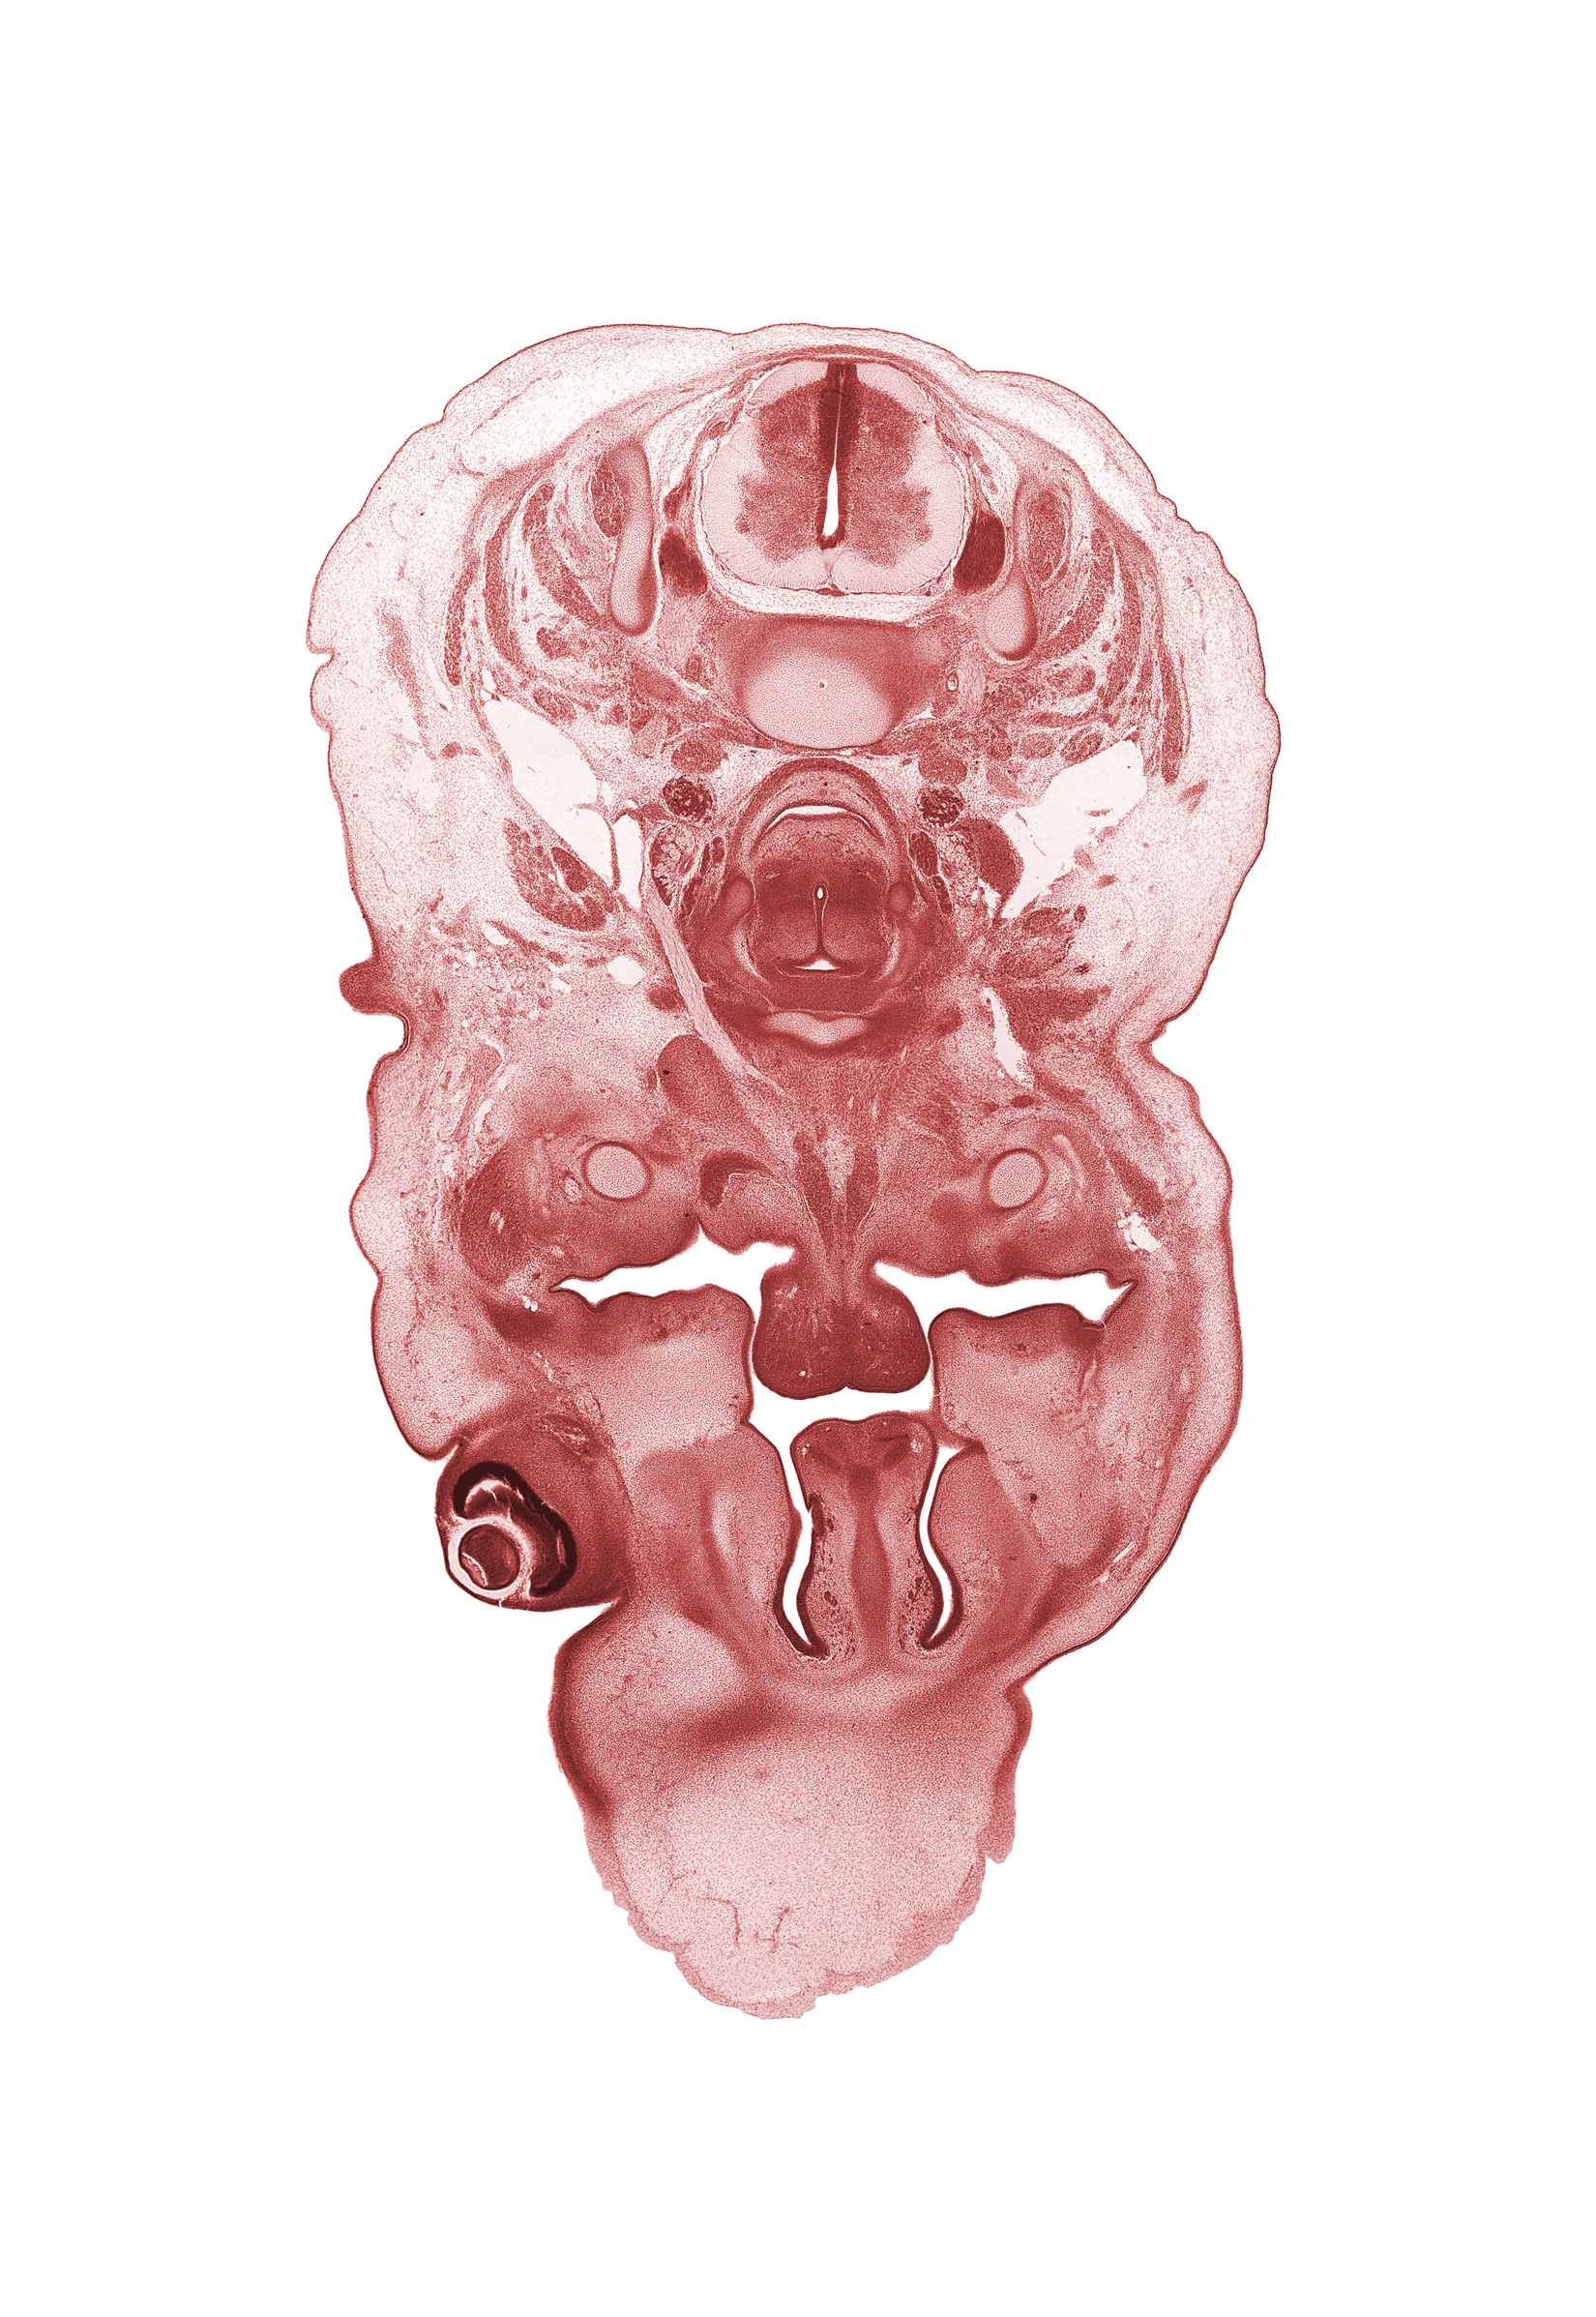 C-5 spinal ganglion, body of hyoid (pharyngeal arch 3 cartilage), body of tongue, cornea, dorsal horn of grey matter, frontal prominence, geniohyoid muscle, hypoglossal nerve (CN XII), inferior ganglion of vagus nerve (CN X), internal carotid artery, internal jugular vein, jugular lymph sac, middle cervical sympathetic ganglion, nasal capsule, nasal cavity (nasal sac), nasal septal cartilage, palatine shelf, pharyngeal arch 1 cartilage (Meckel), platysma muscle, ventral horn of grey matter, vertebral artery